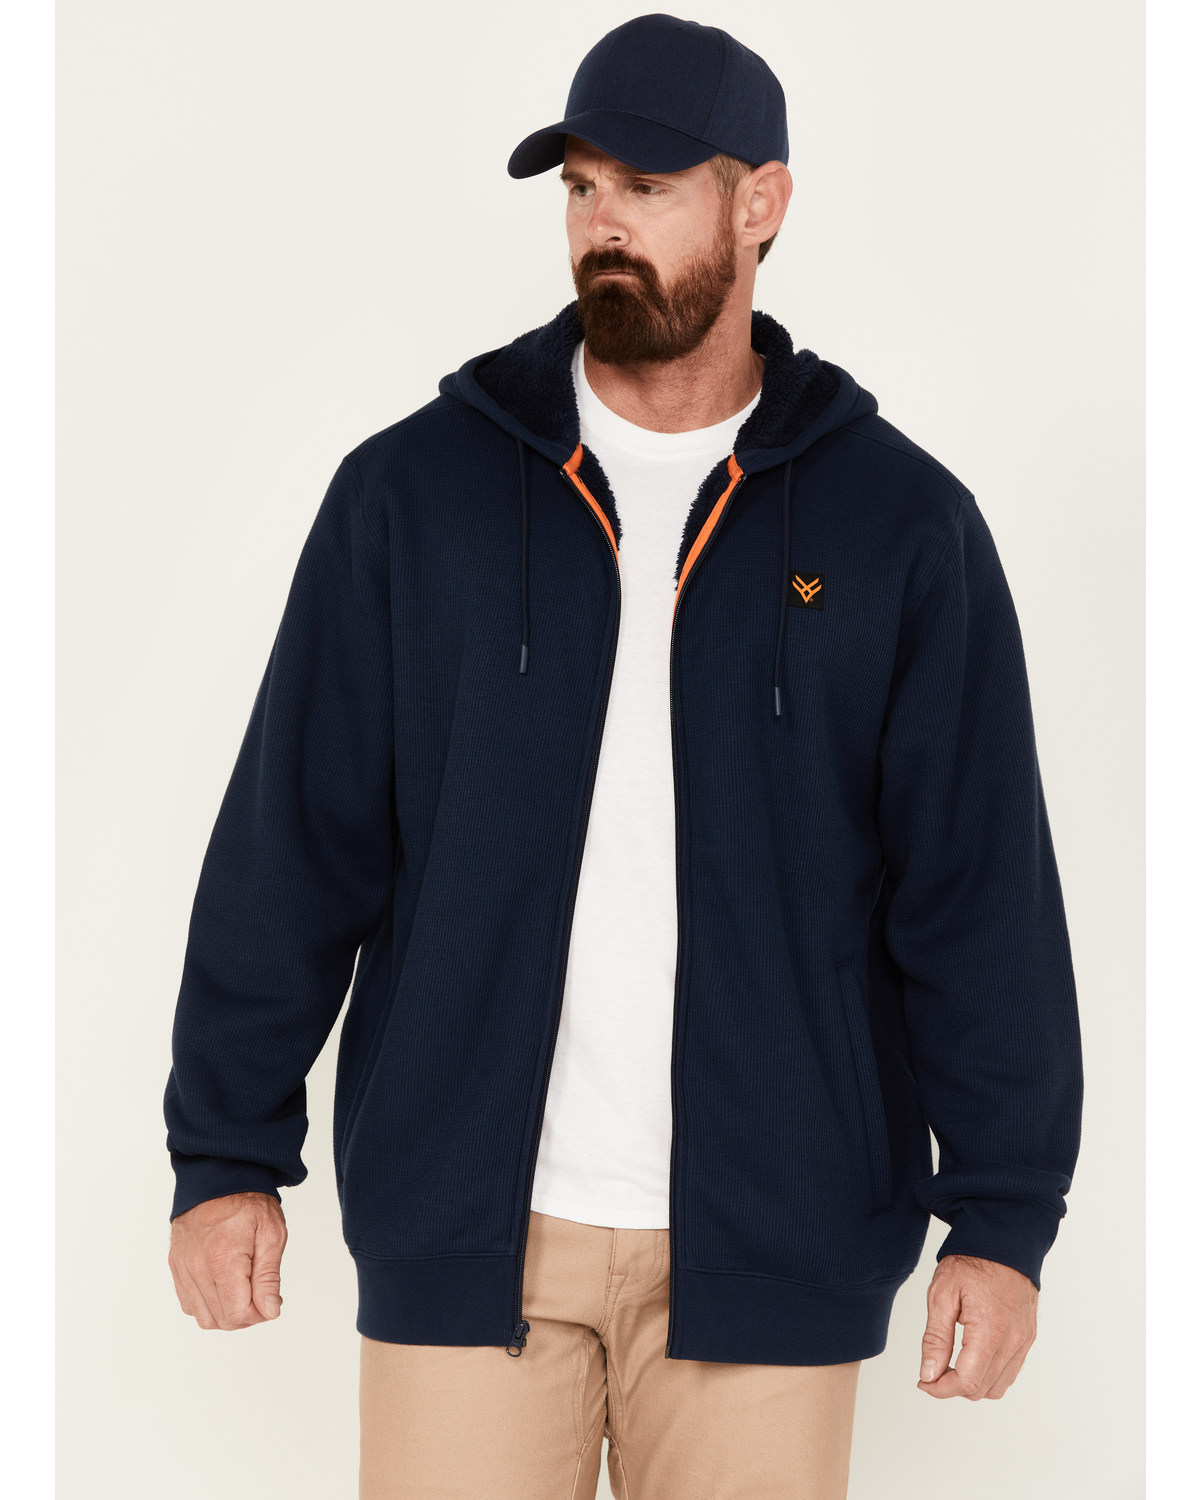 Hawx Men's Thermal Sherpa Lined Hooded Work Jacket